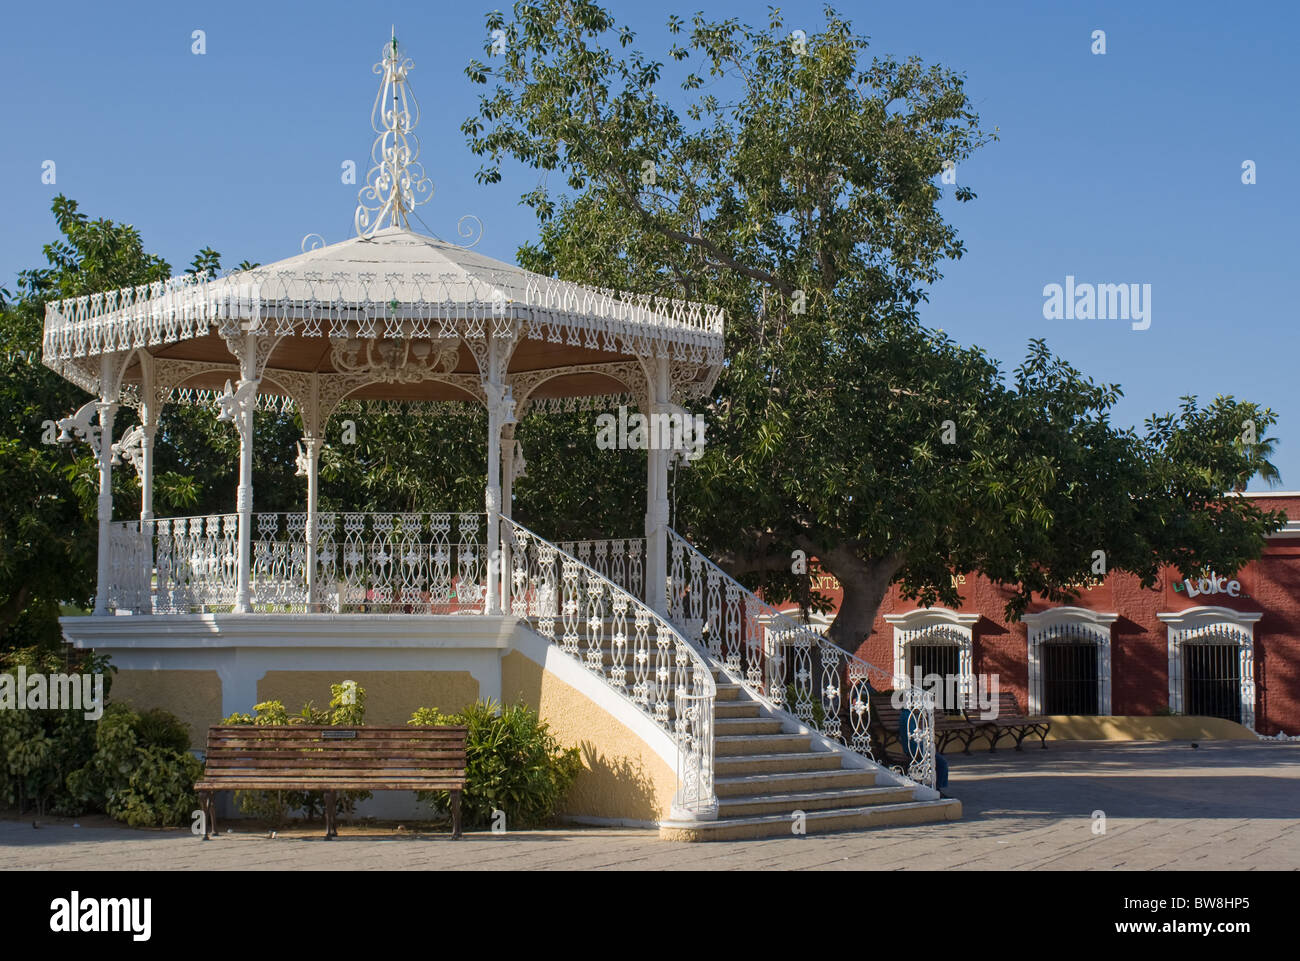 Gazebo and plaza in San Jose del Cabo, Baja, California Sur, Mexico Stock Photo